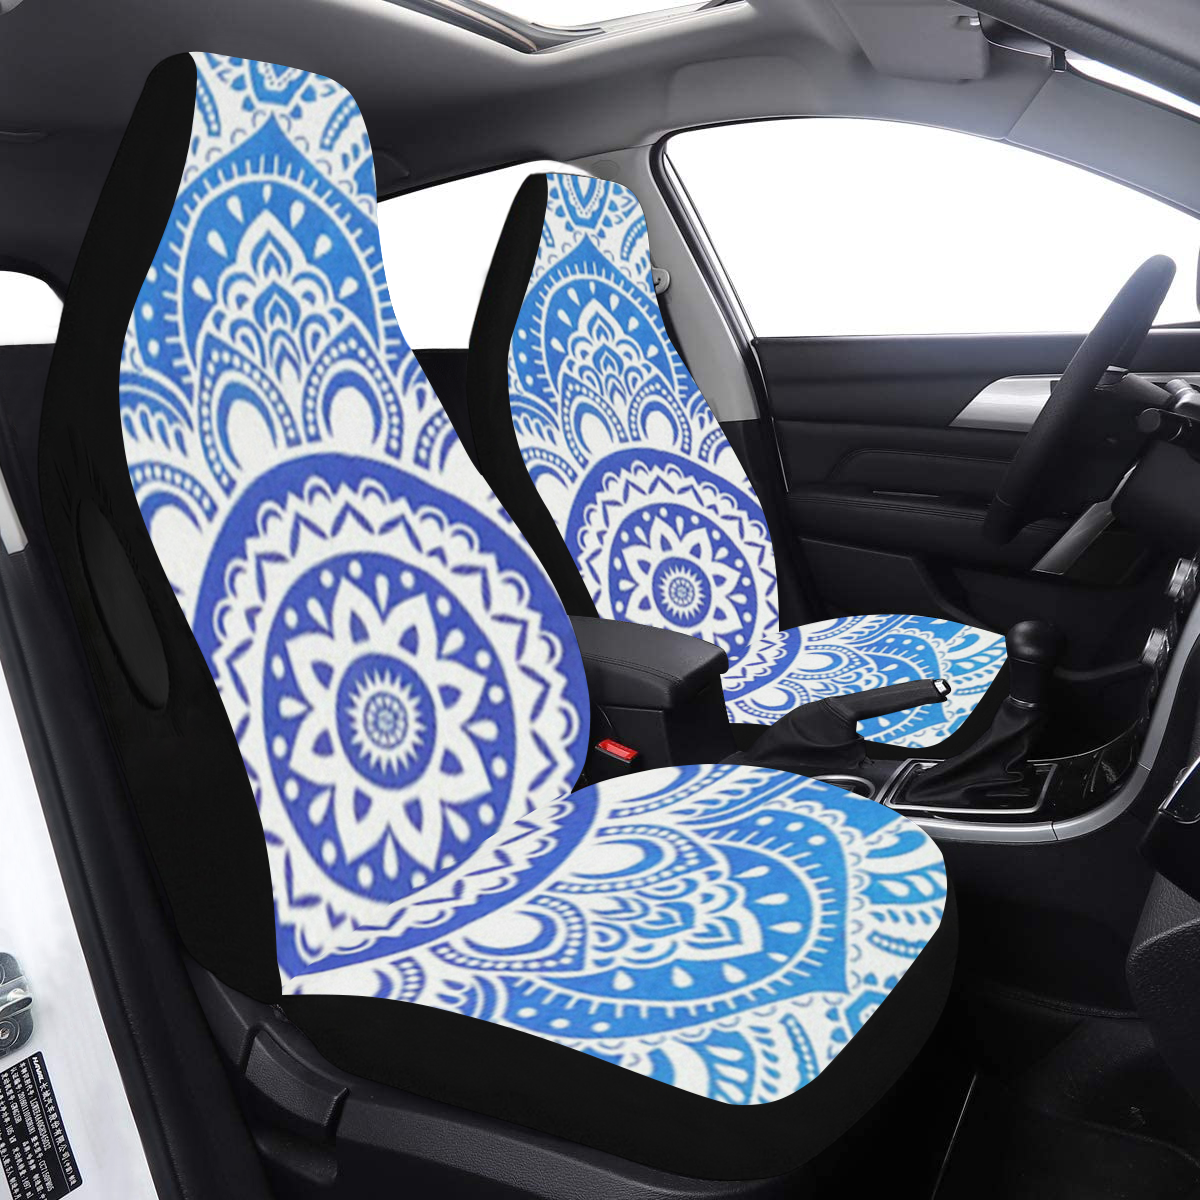 MANDALA LOTUS FLOWER Car Seat Cover Airbag Compatible (Set of 2)